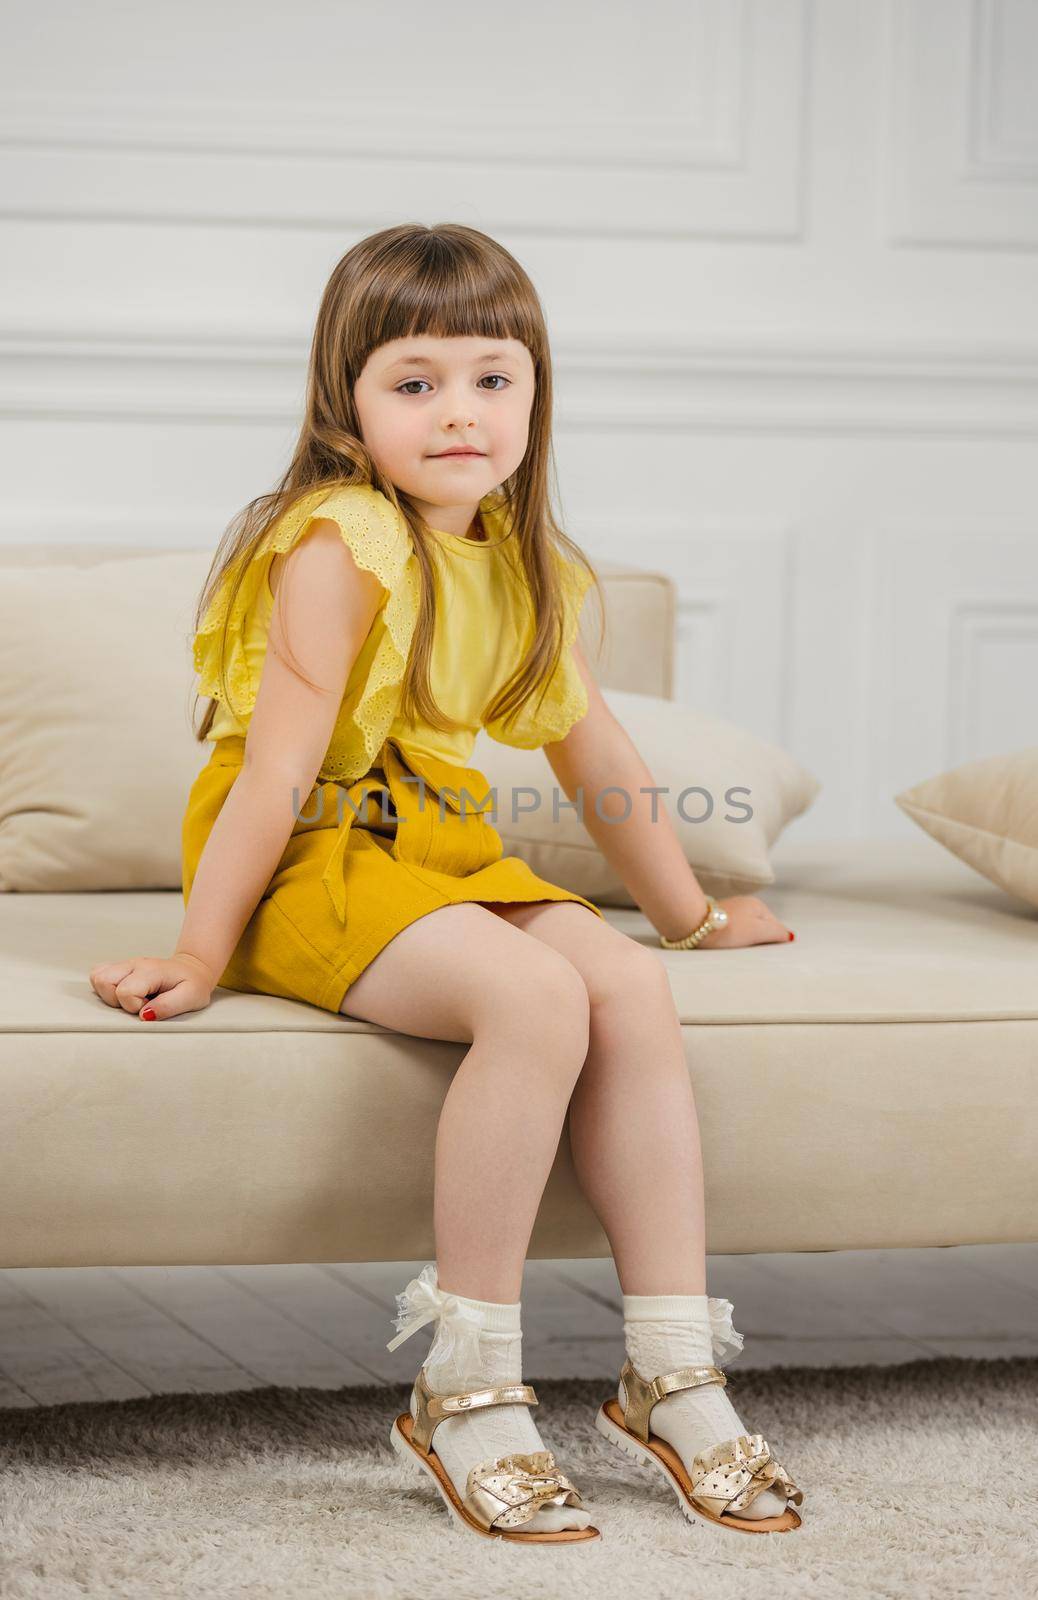 girl sitting on sofas by zokov